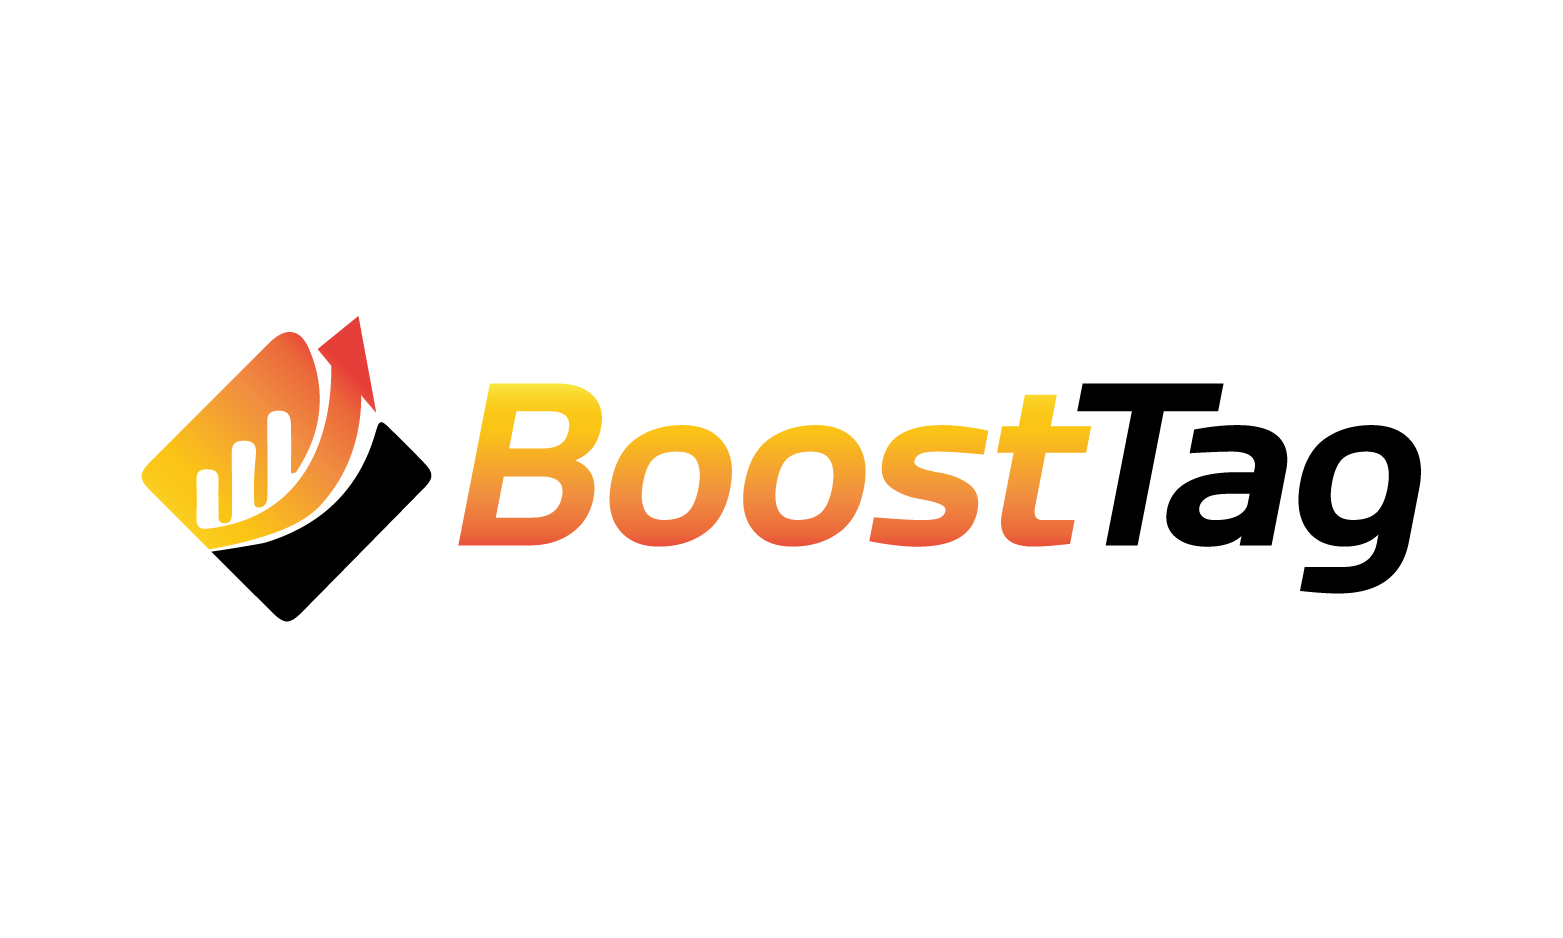 BoostTag.com - Creative brandable domain for sale